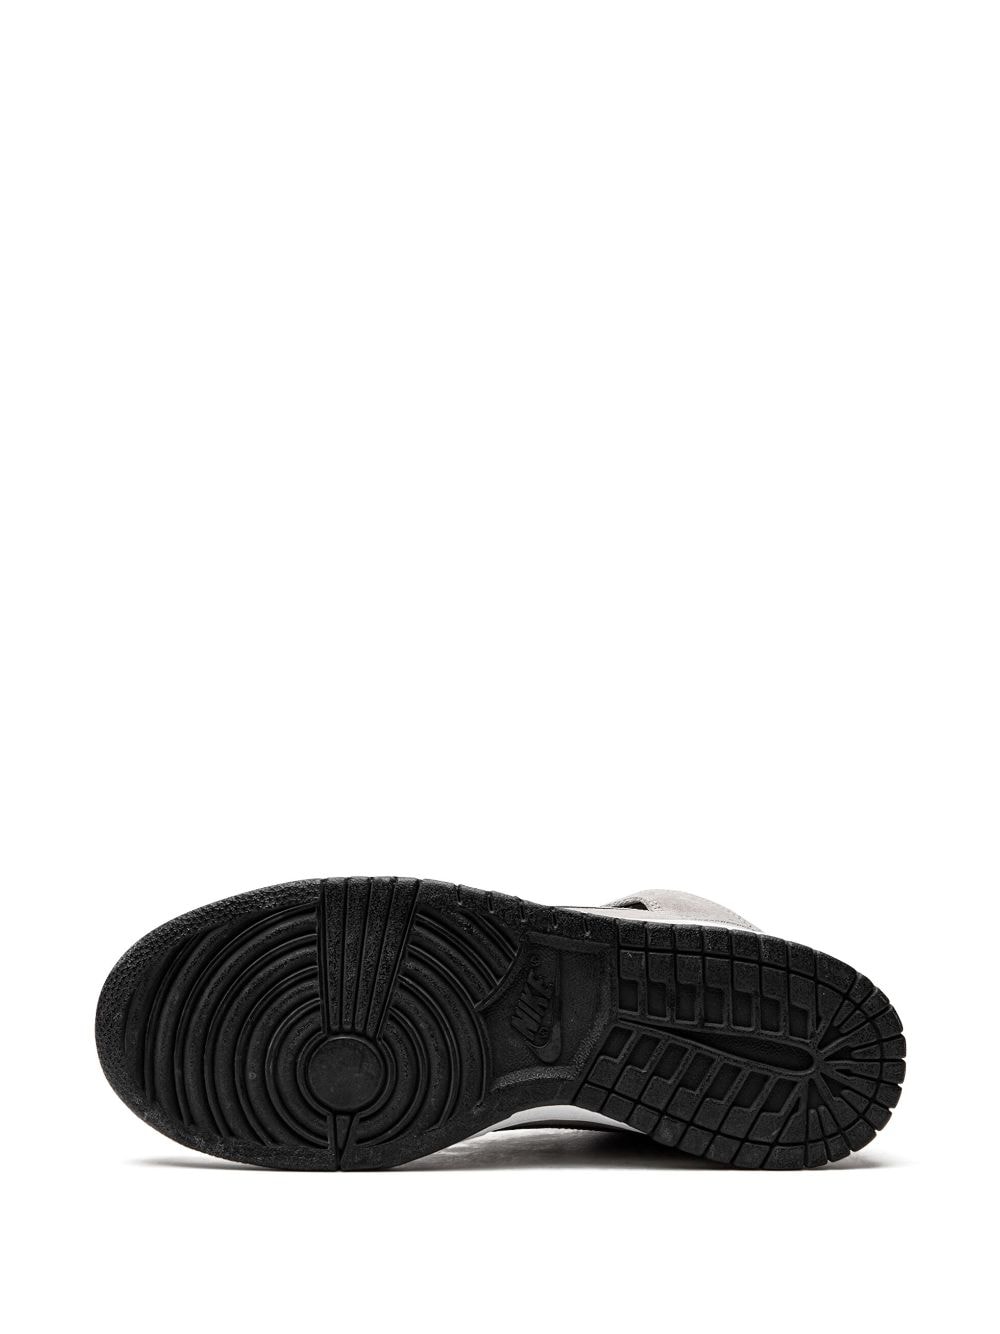 Shop Nike Dunk High Pro Sb "pee-wee Herman" Sneakers In Grey